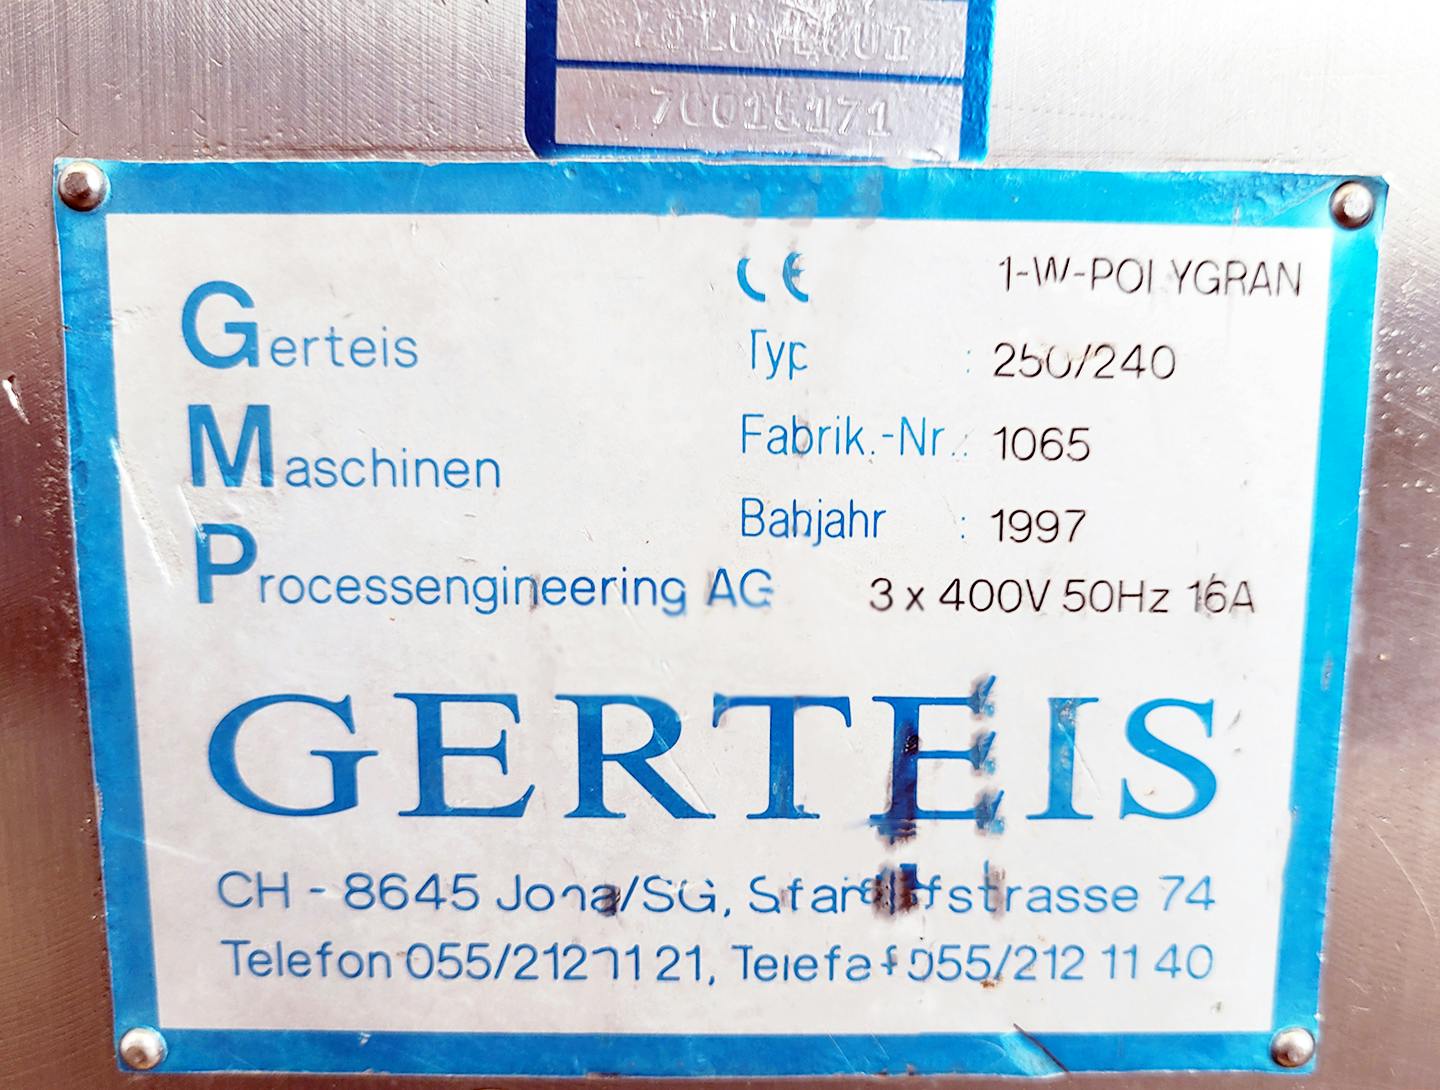 Gerteis 1-W-Polygran 250/240 - Granulateur tamis - image 18